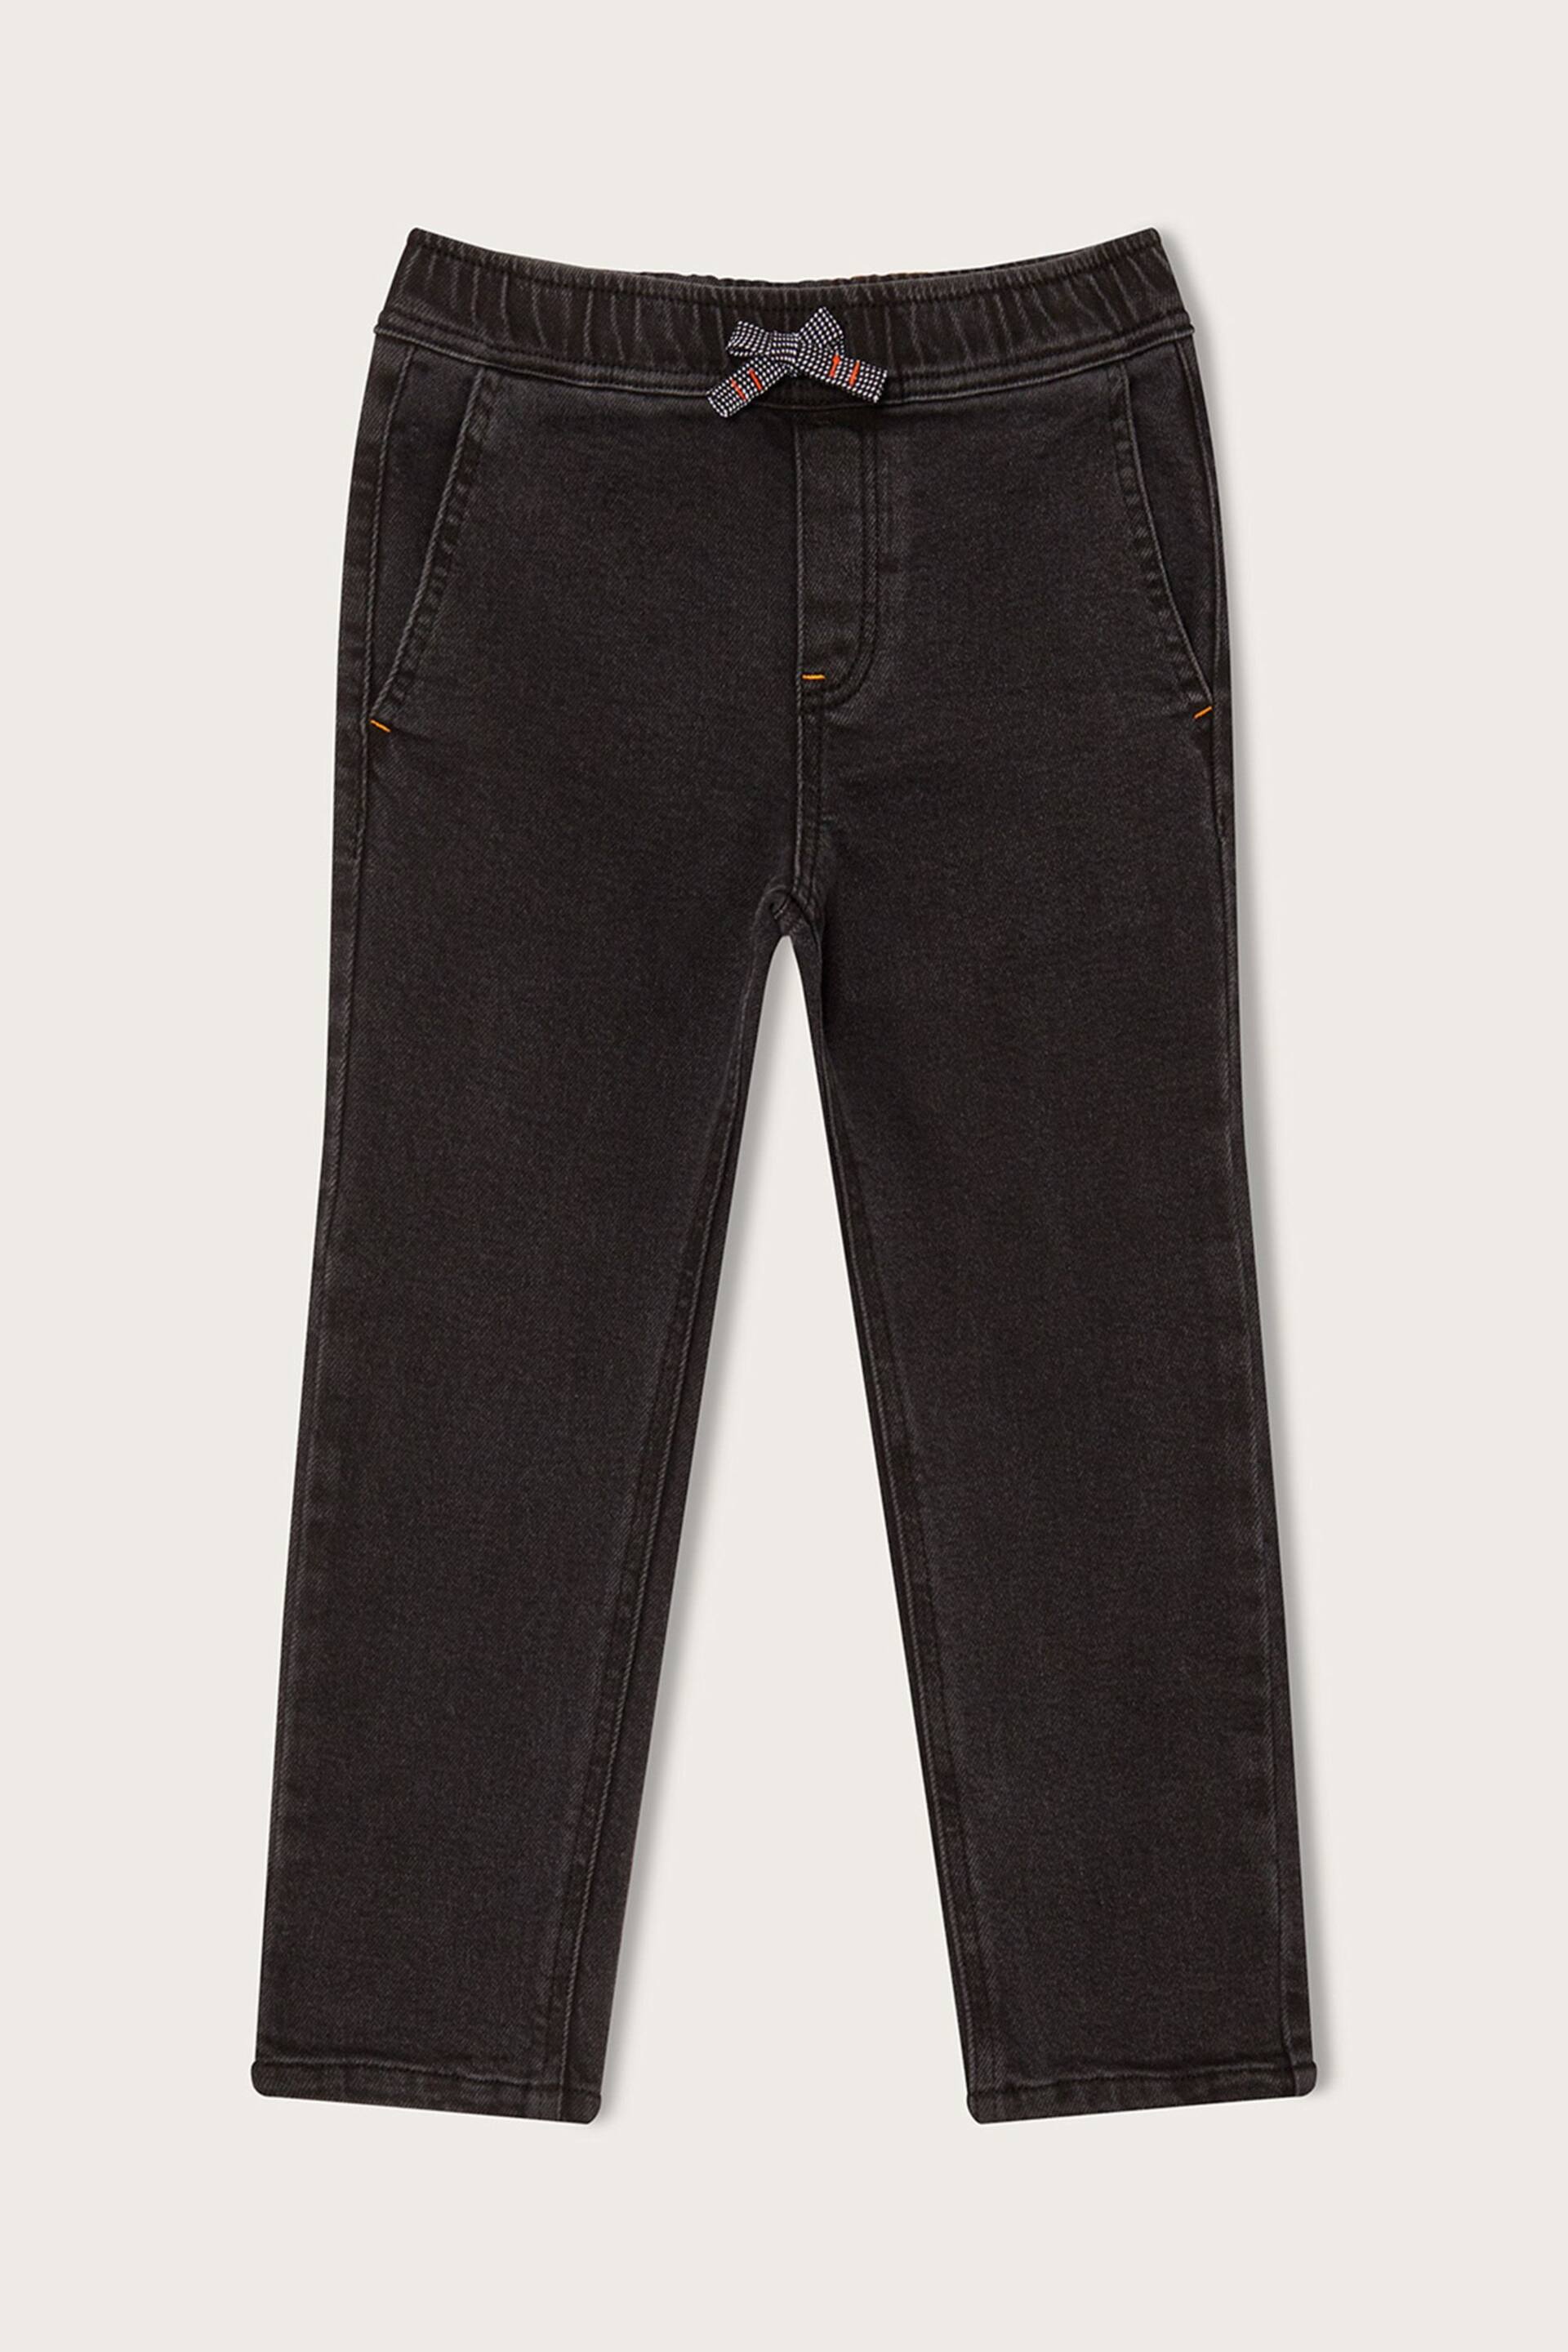 Monsoon Black Pull-On Denim Jeans - Image 1 of 3